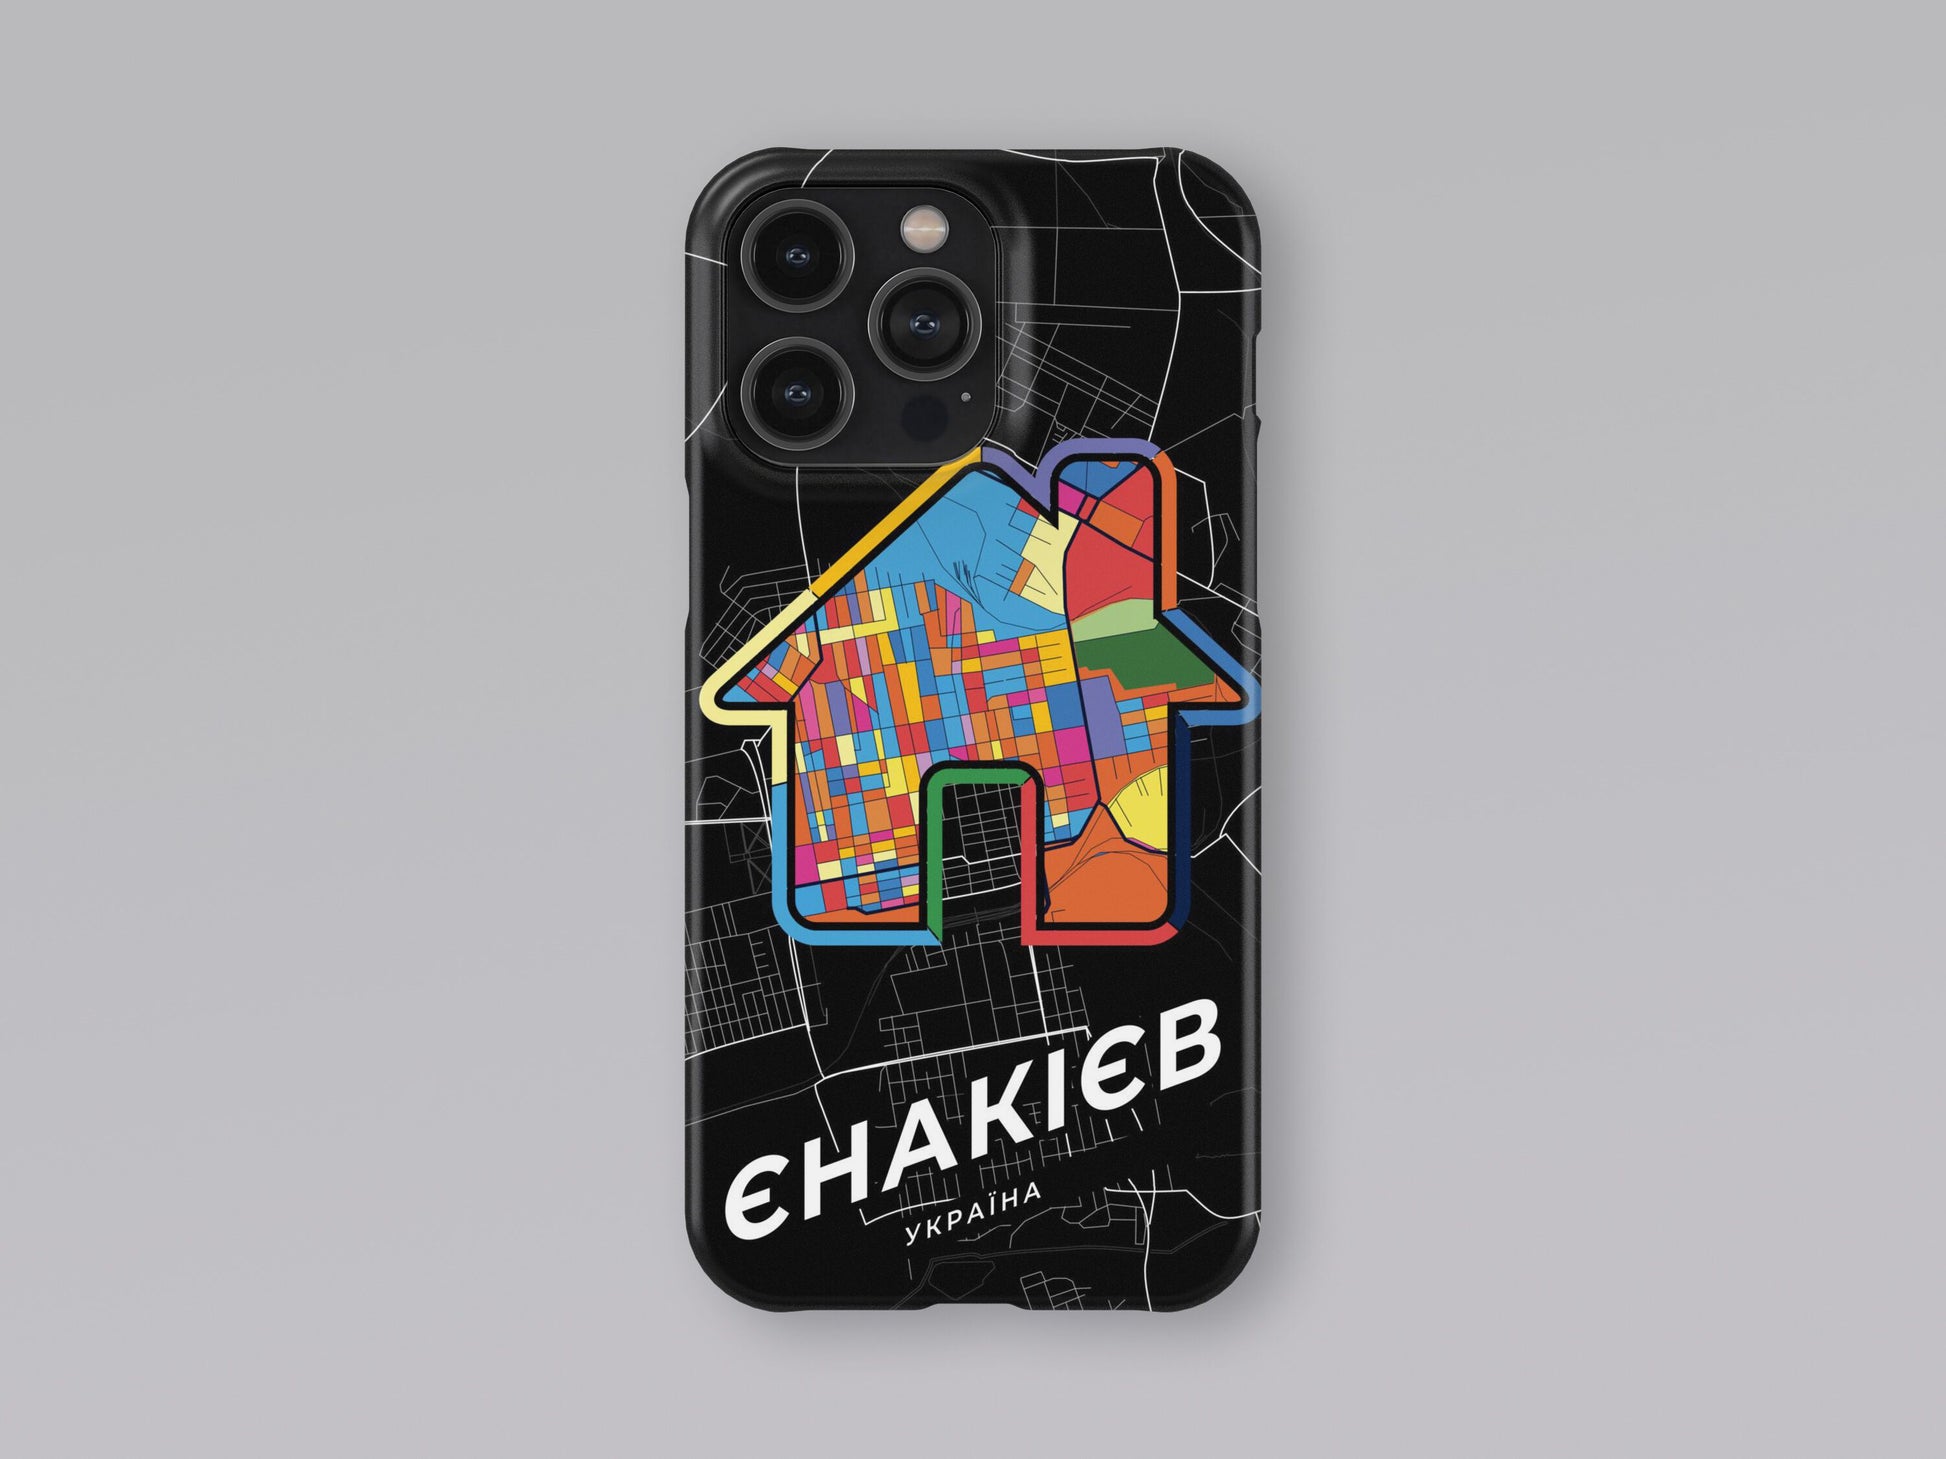 Yenakiieve Ukraine slim phone case with colorful icon 3